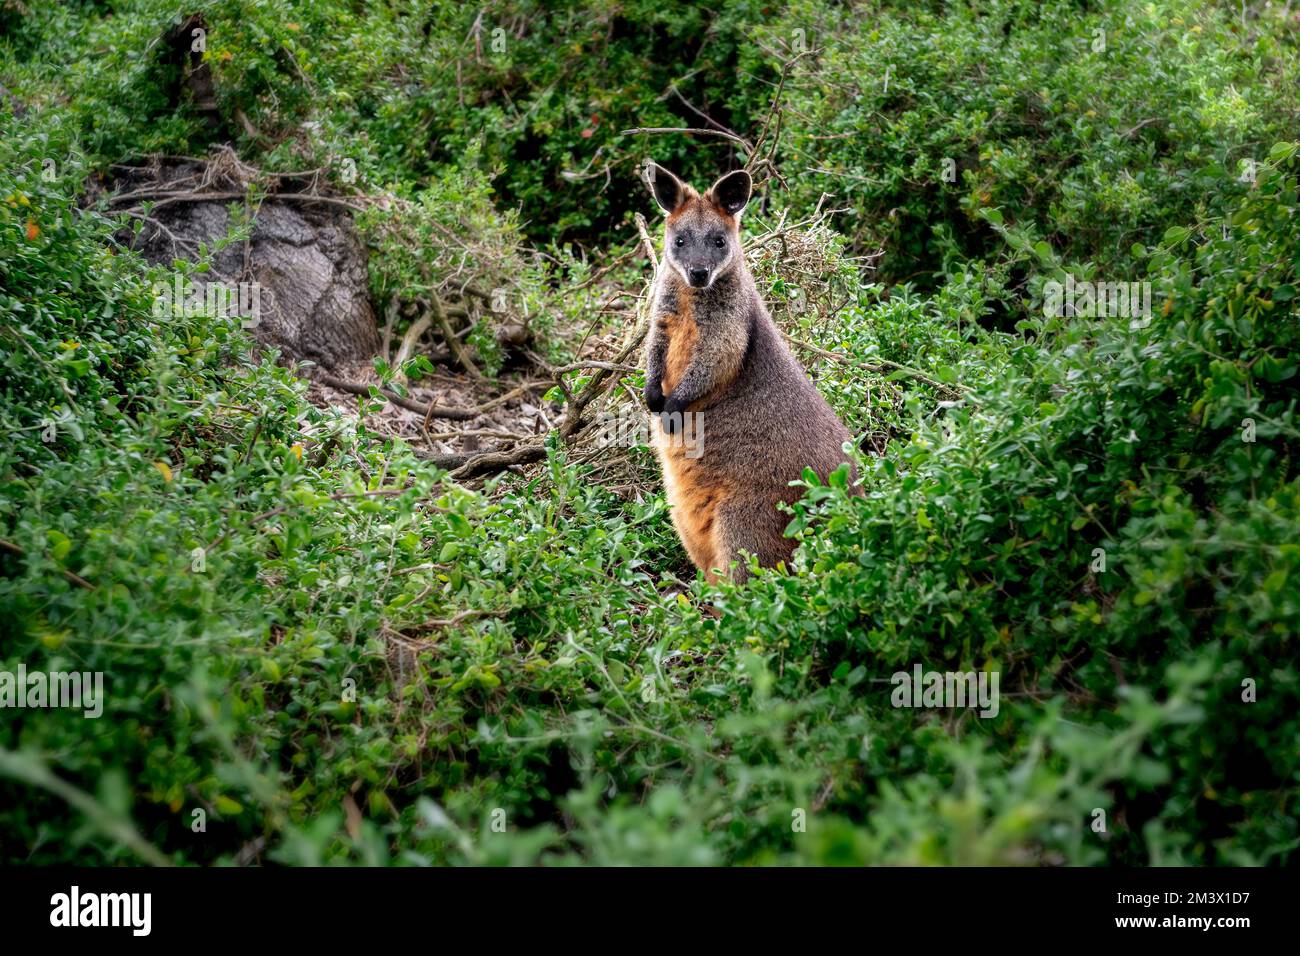 Swamp Wallaby in its natural environment. Stock Photo